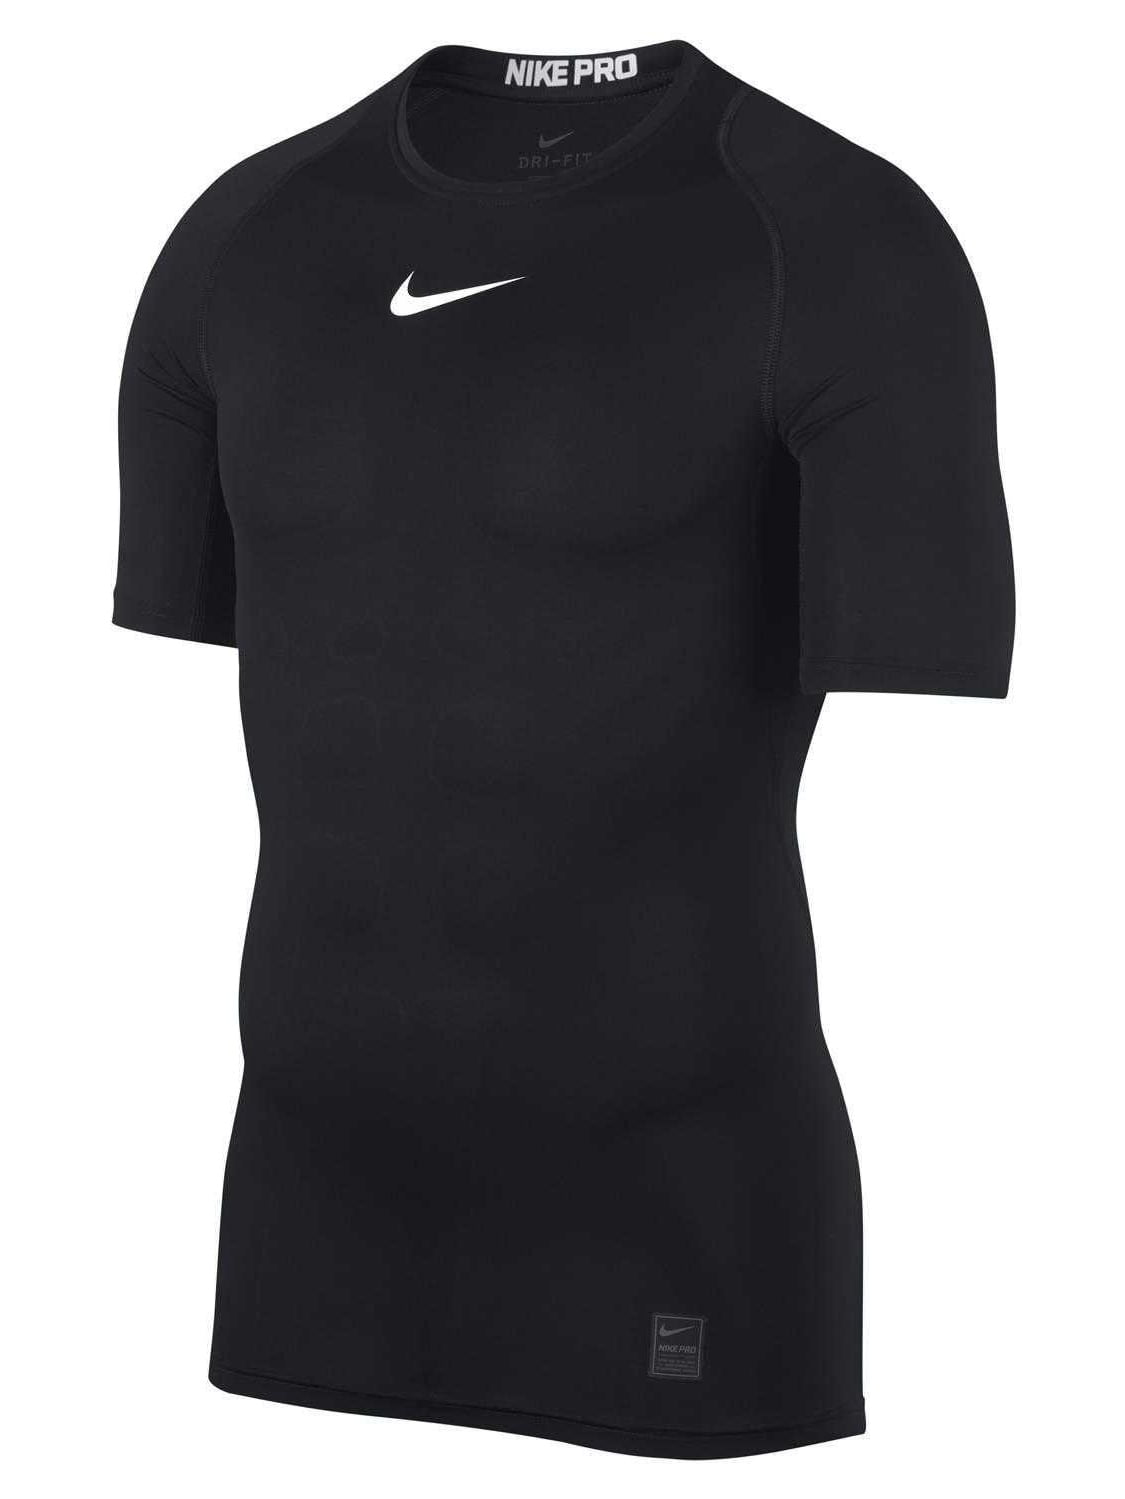 Nike Men's Pro Short Sleeve Top -